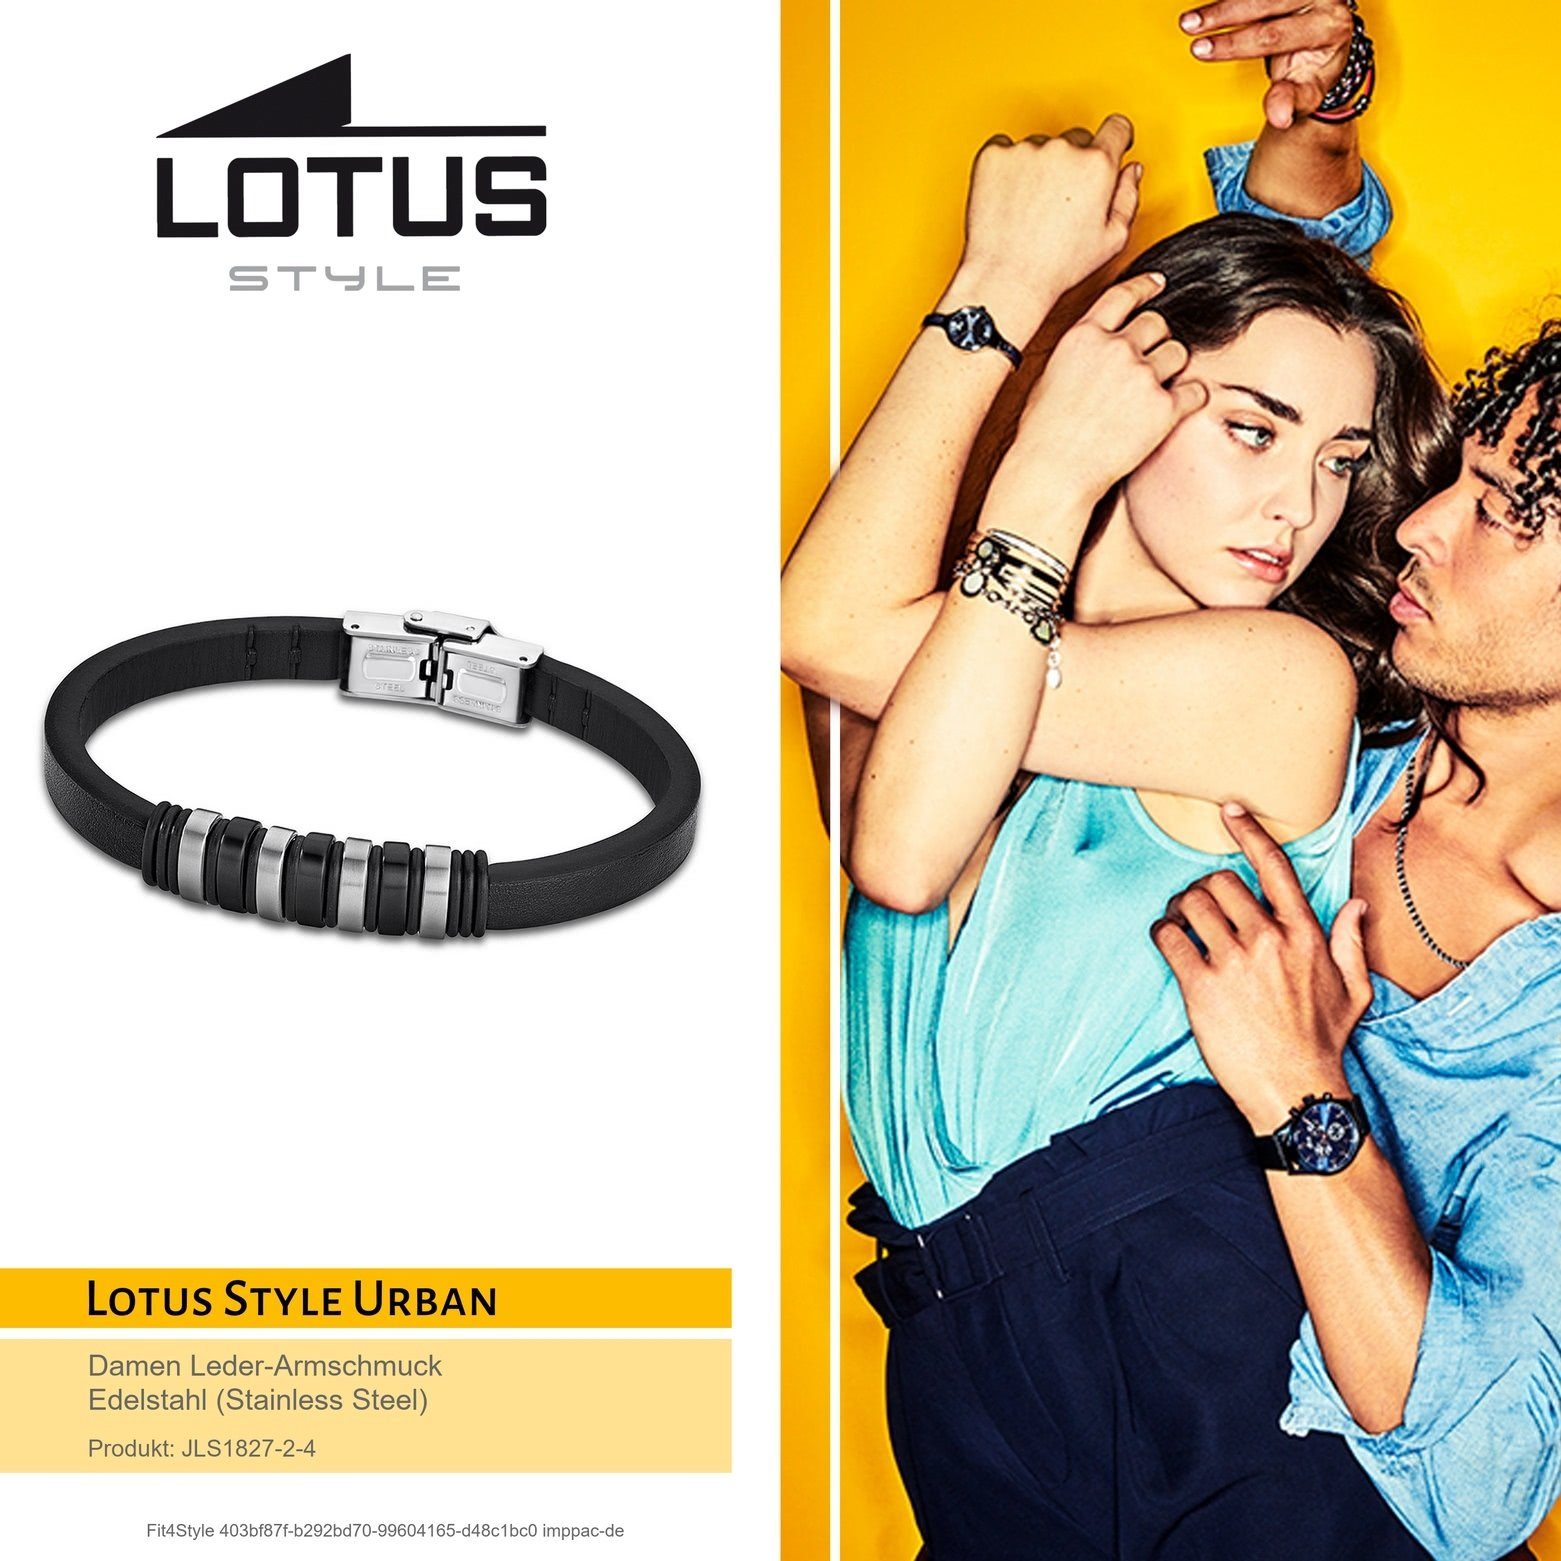 Style Lotus Armband (Armband), Lotus Herren für Edelstahl Style schwarz Steel), Armband aus Echtleder (Stainless Damen,